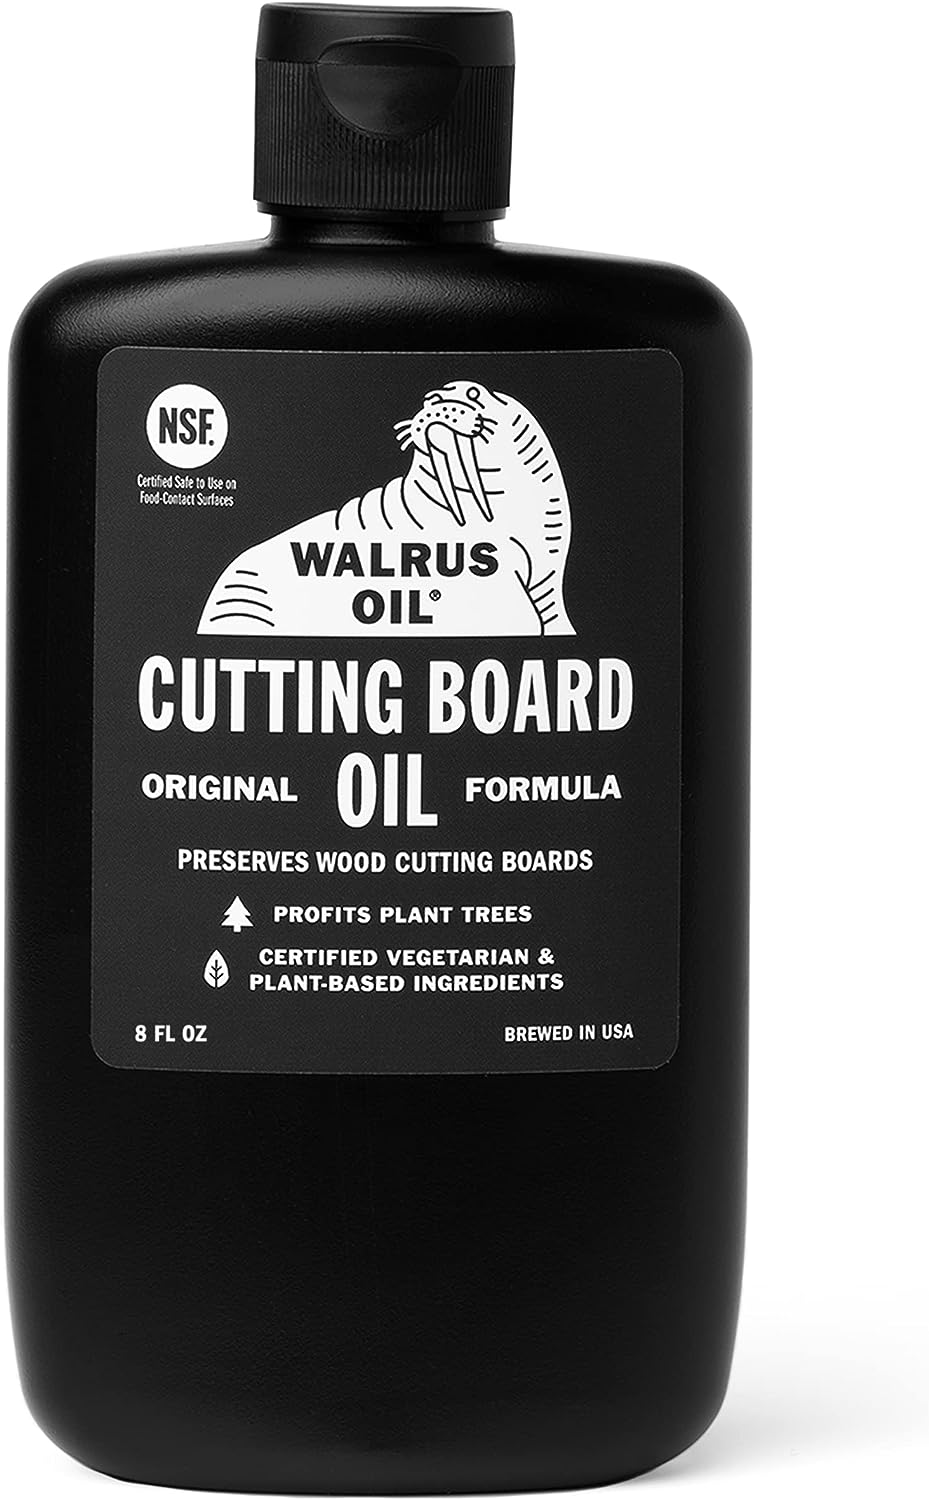 WALRUS OIL - Cutting Board Oil and Wood Butcher Block Oil, 8 oz Bottle, FDA Food-Safe